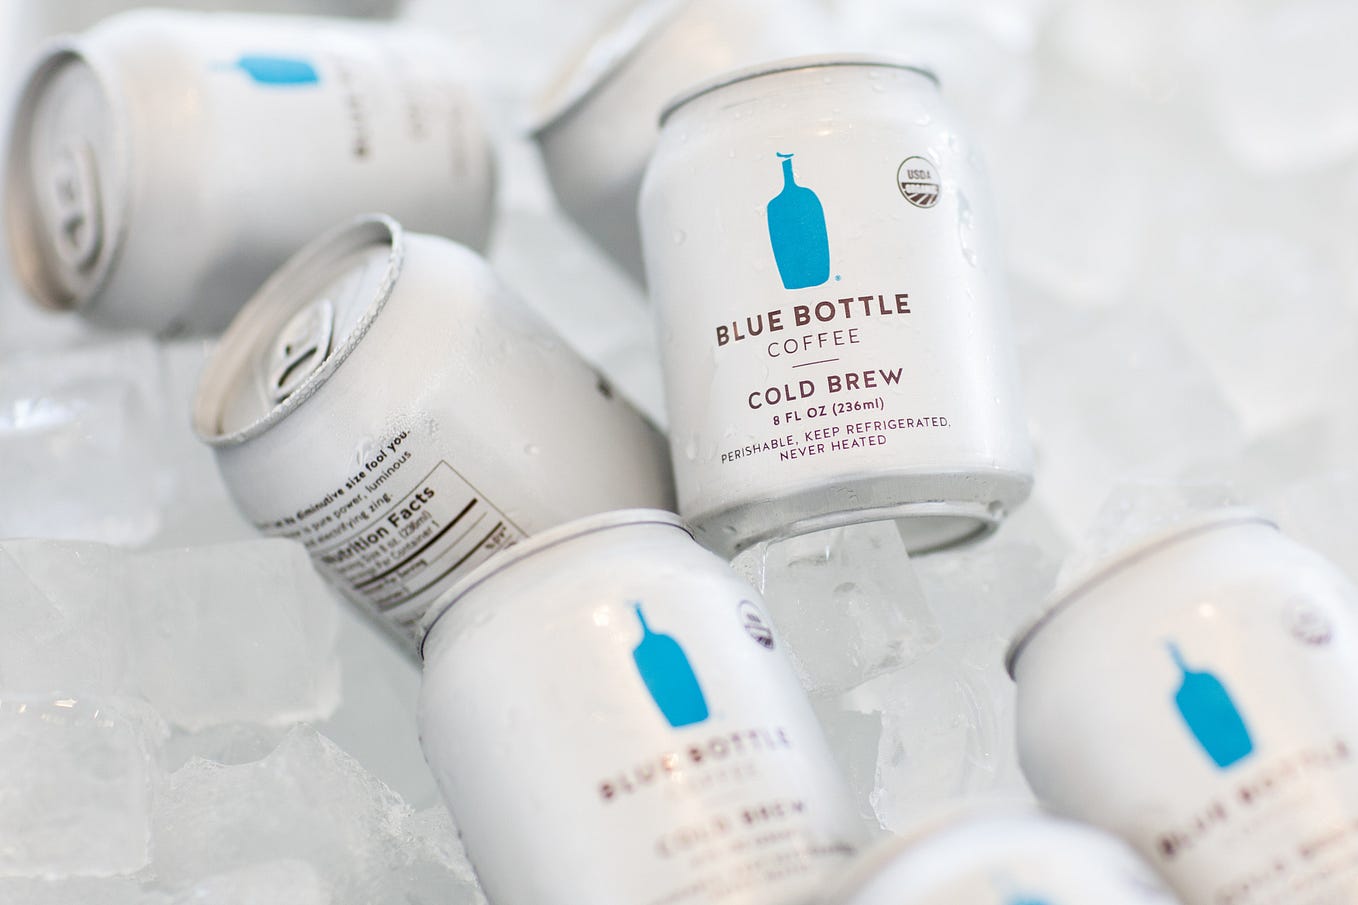 Blue Bottle Coffee, THE HUB, Móz Designs